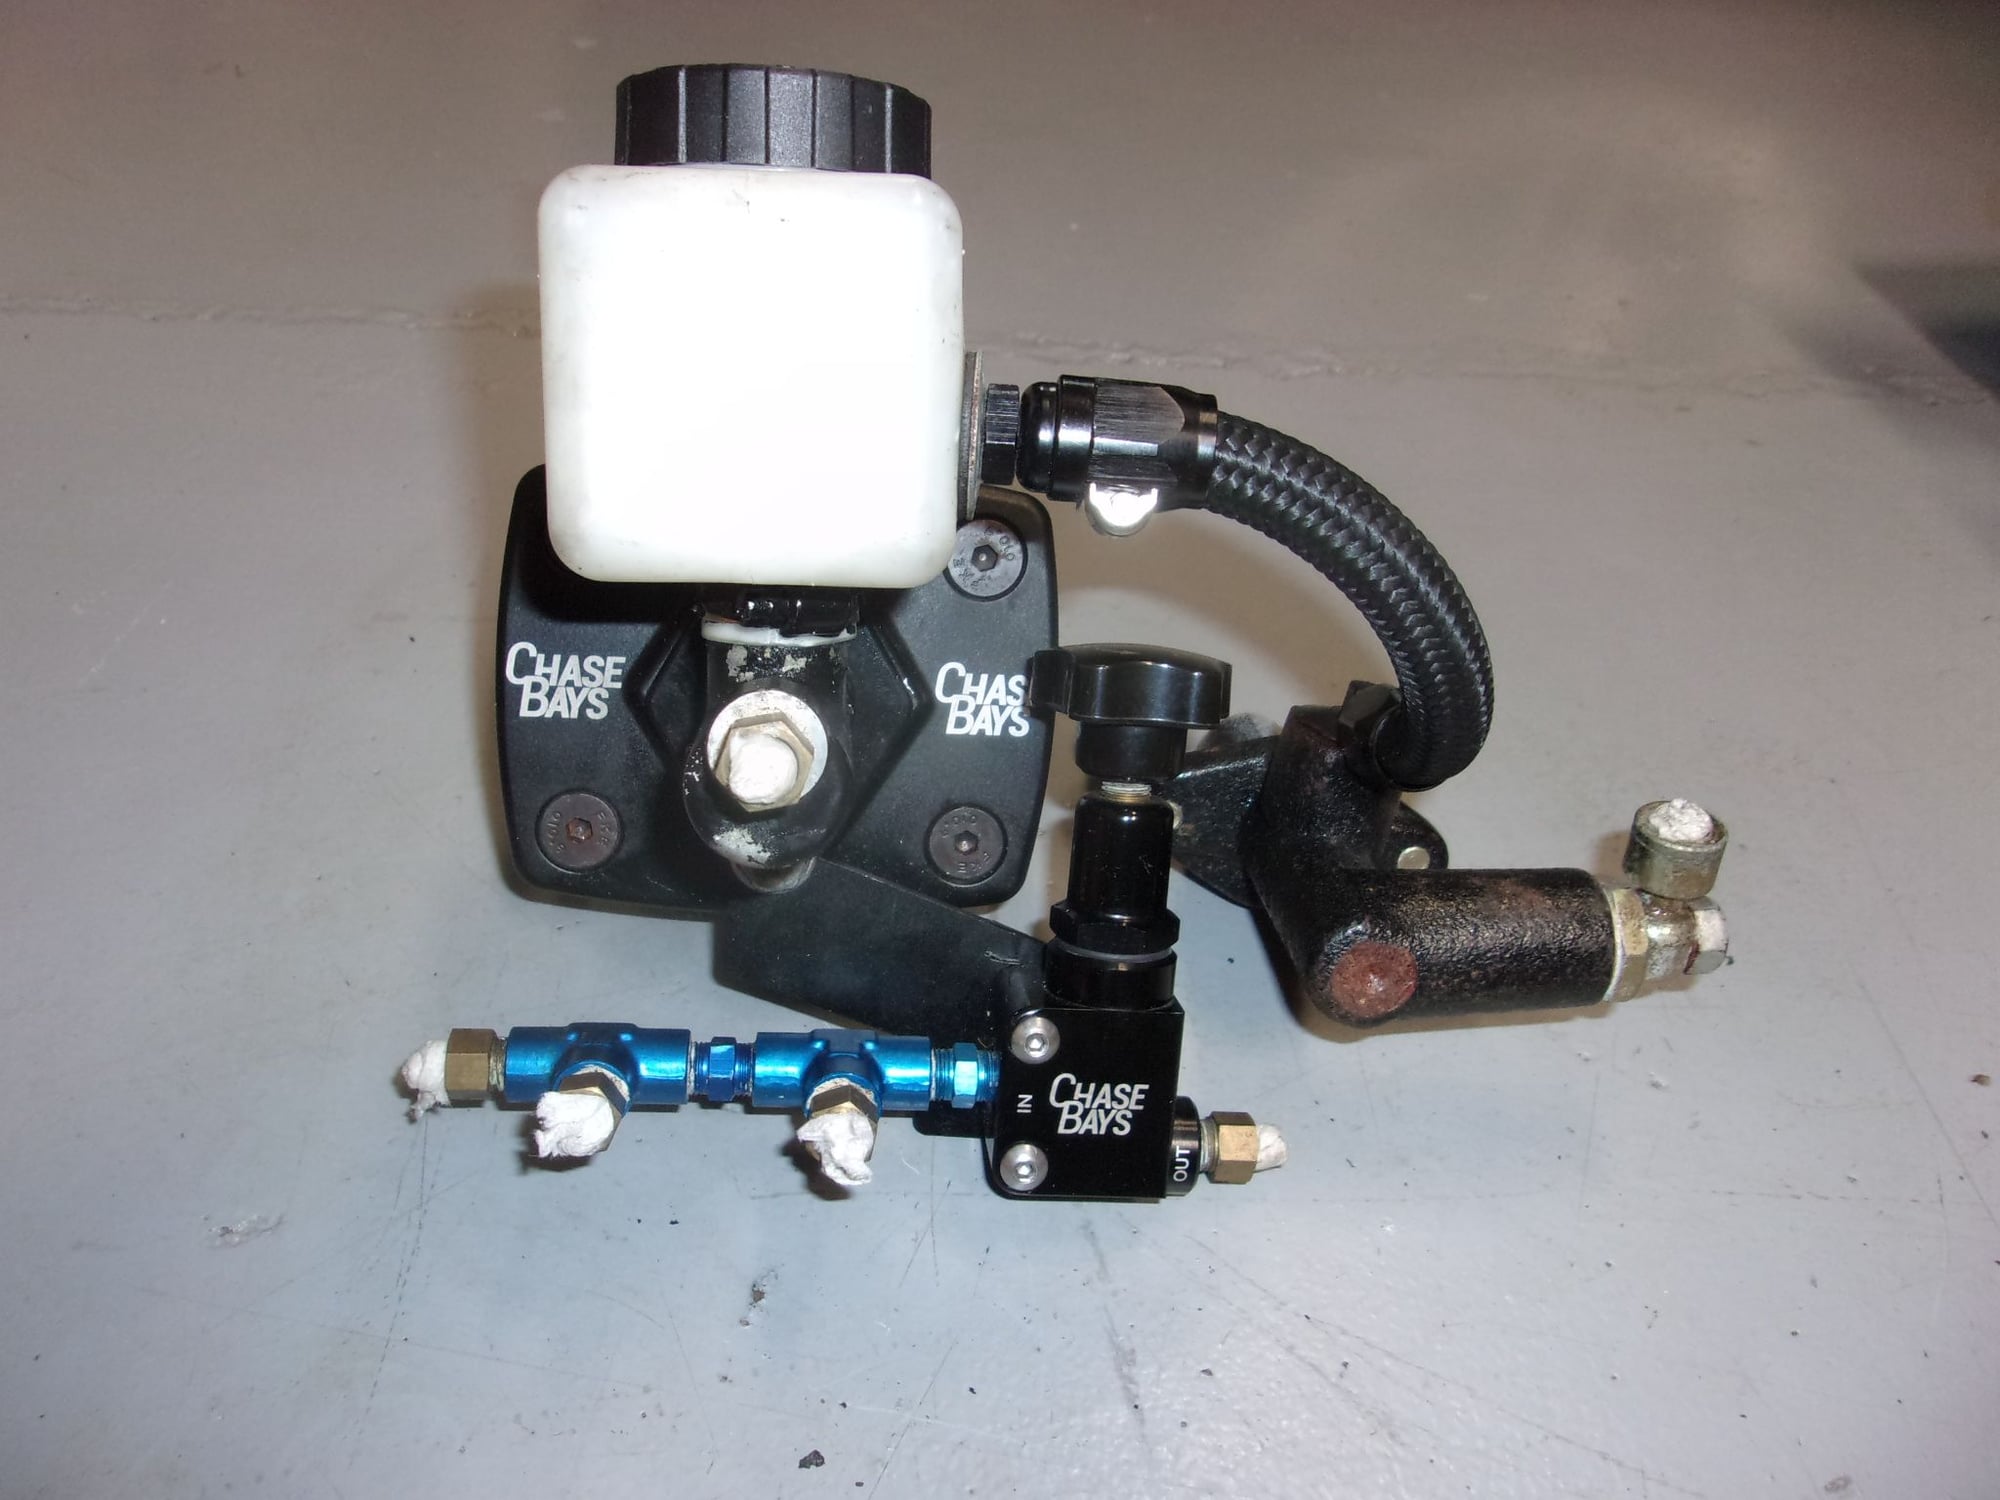 Brakes - CHASE BAYS brake booster delete kit - Used - 1993 to 2002 Mazda RX-7 - Murfreesboro, TN 37130, United States